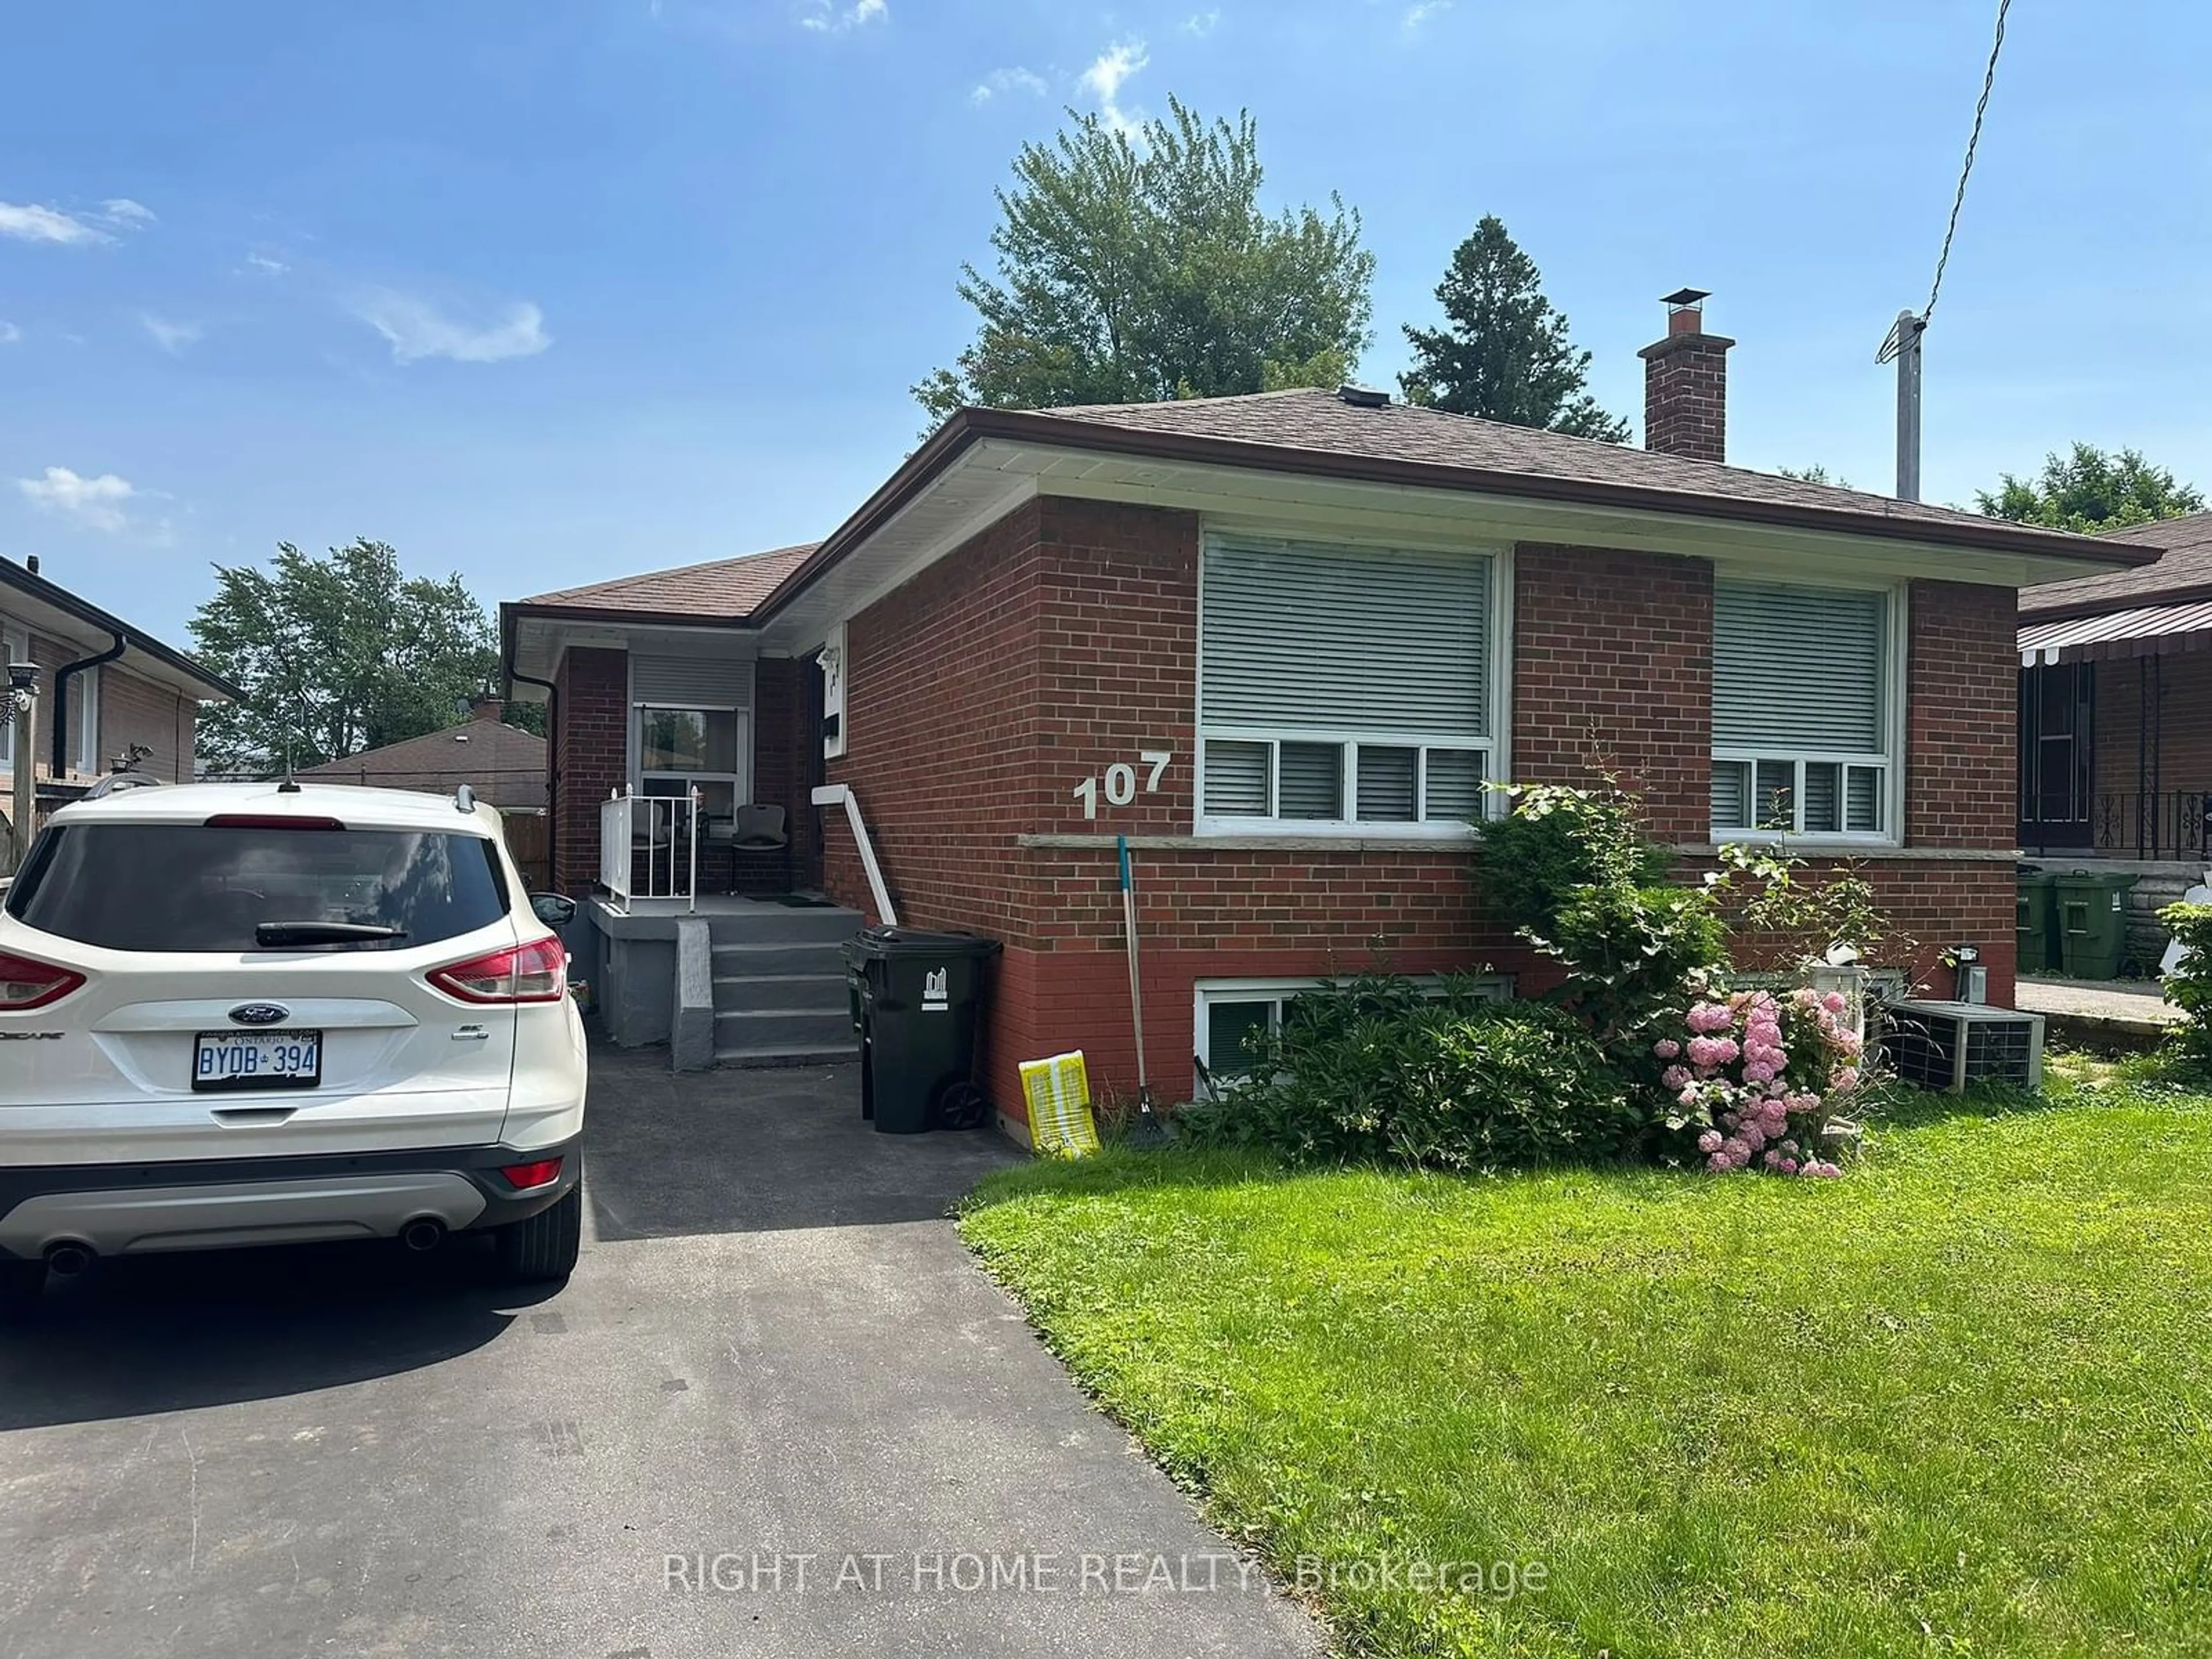 Frontside or backside of a home for 107 Pandora Circ, Toronto Ontario M1H 1V8